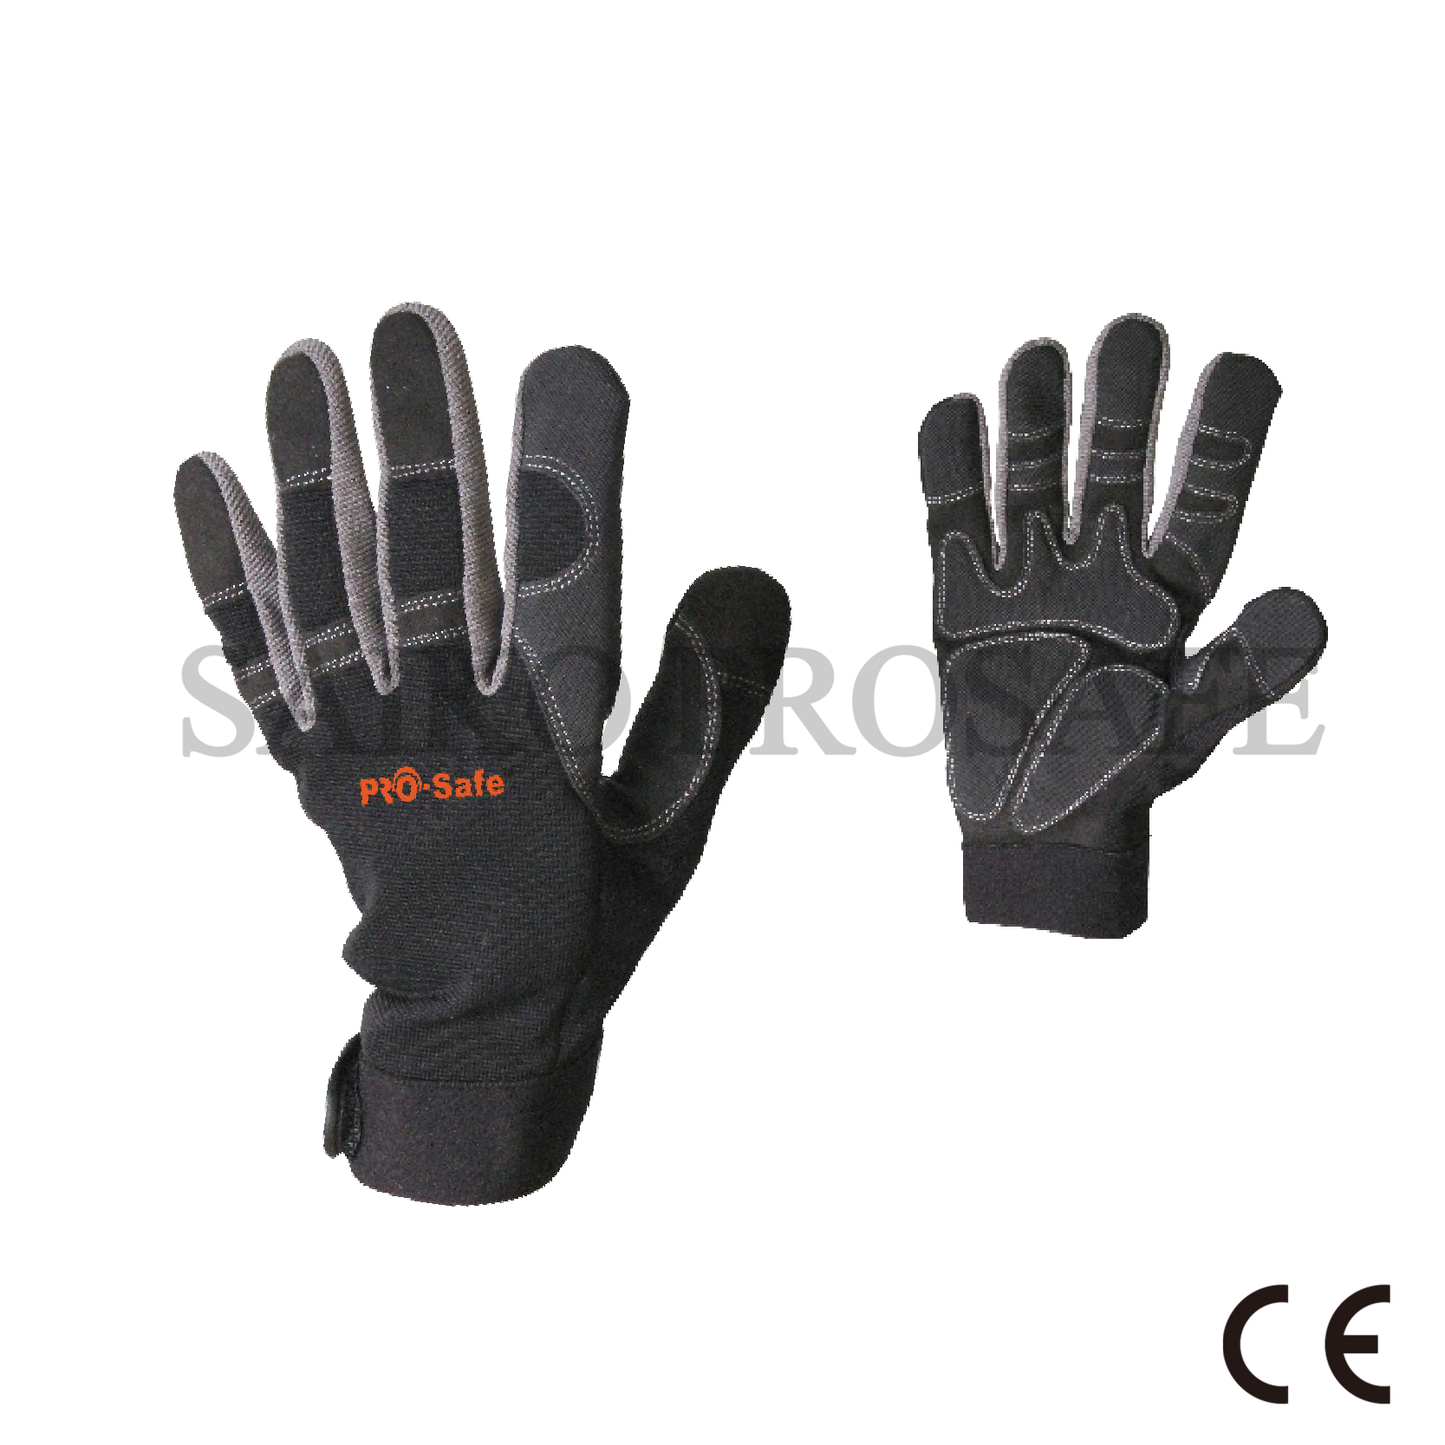 safety gloves anti-vabration gloves work gloves KM151